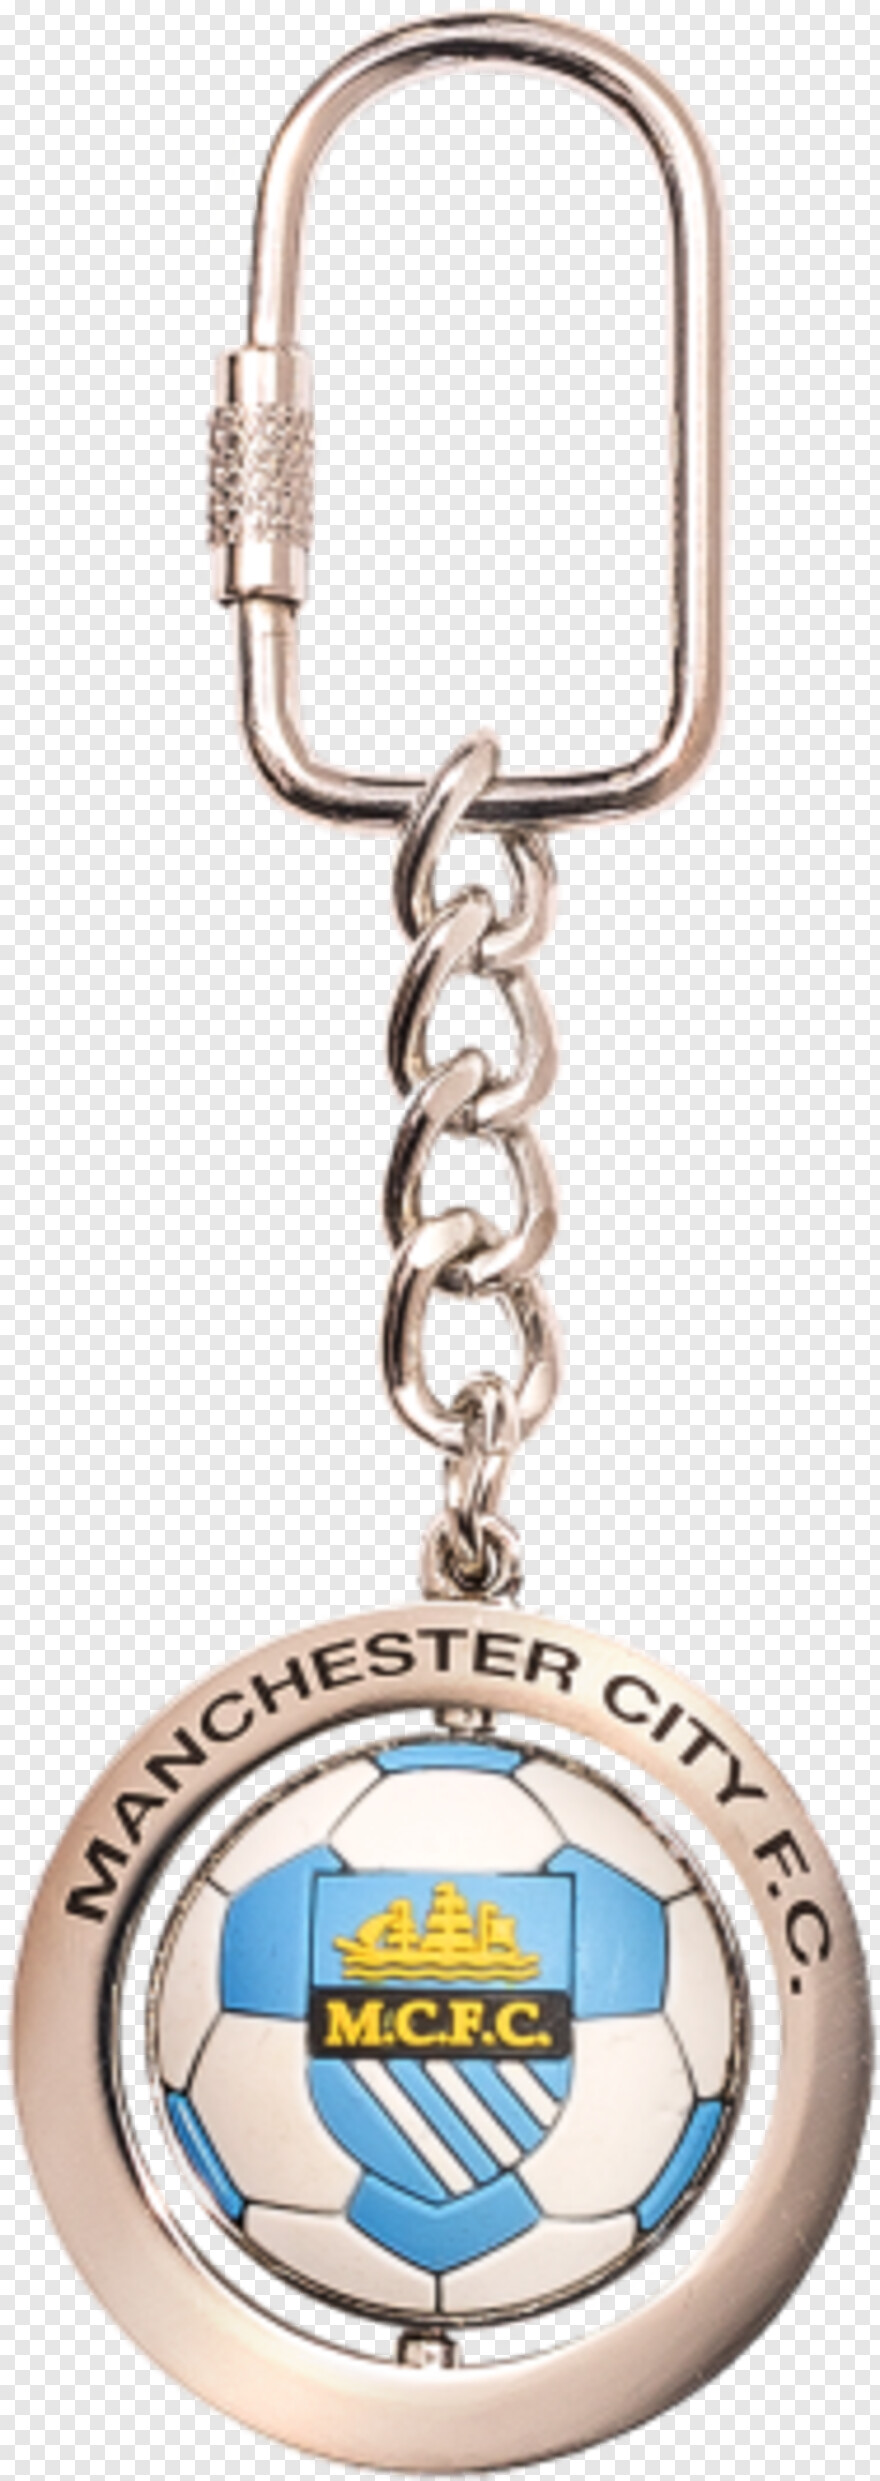 manchester-united-logo # 1009234